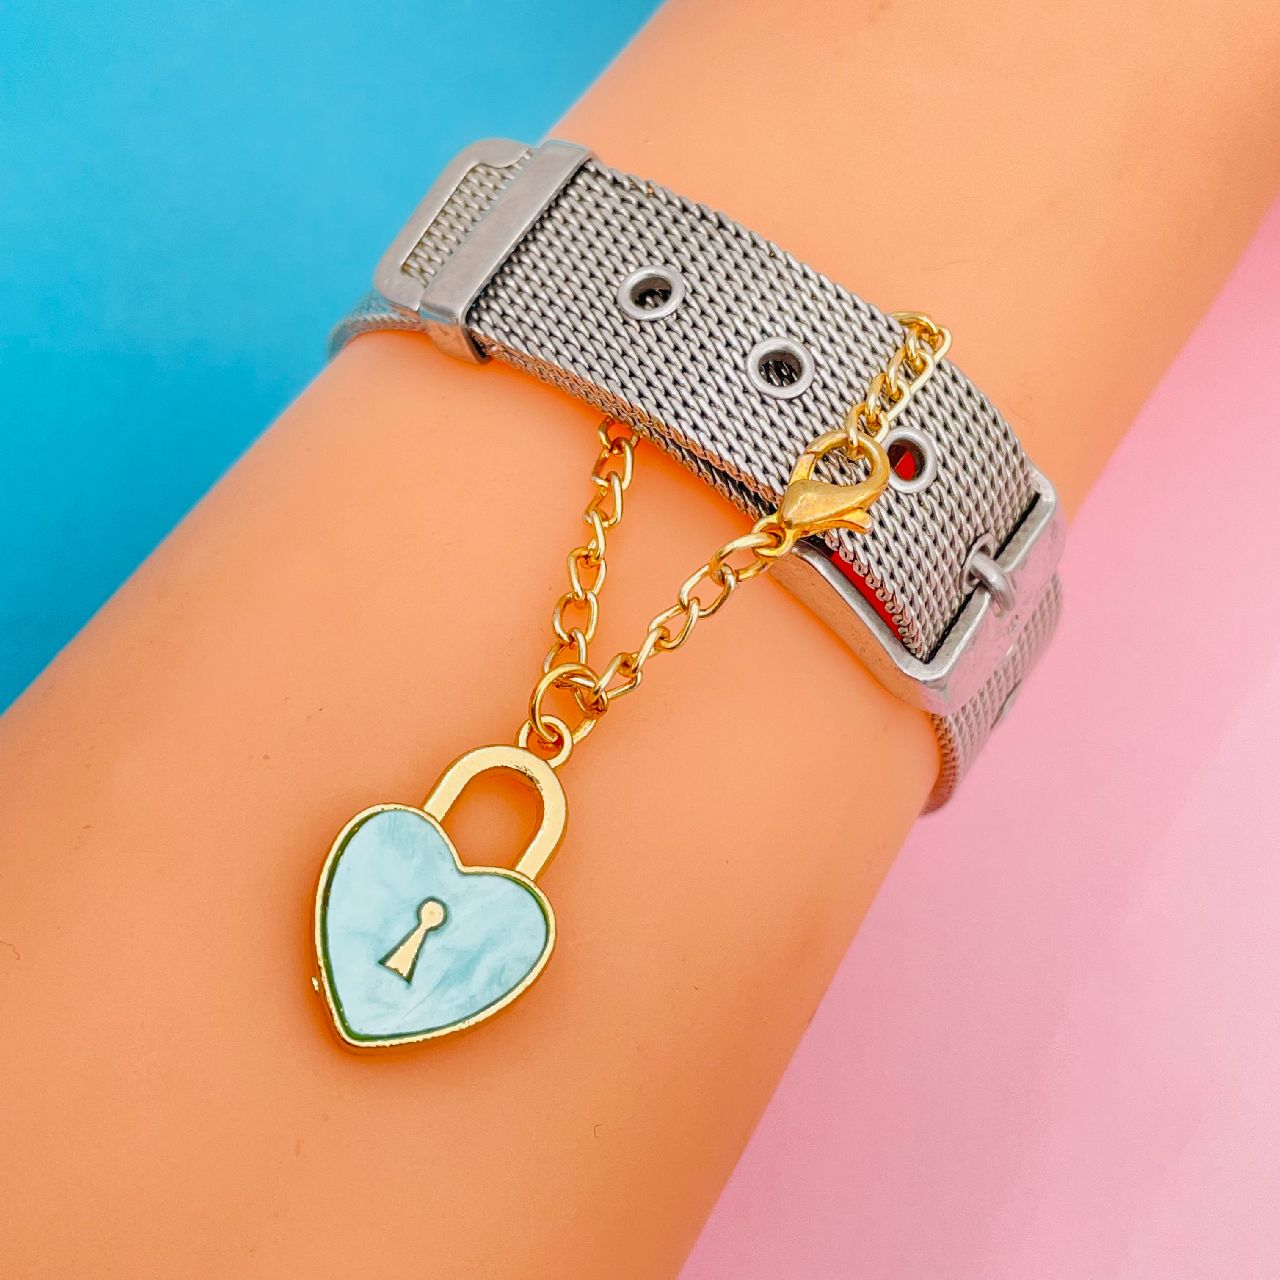 Alloy Gold Heart lock Watch charm For Women Blue